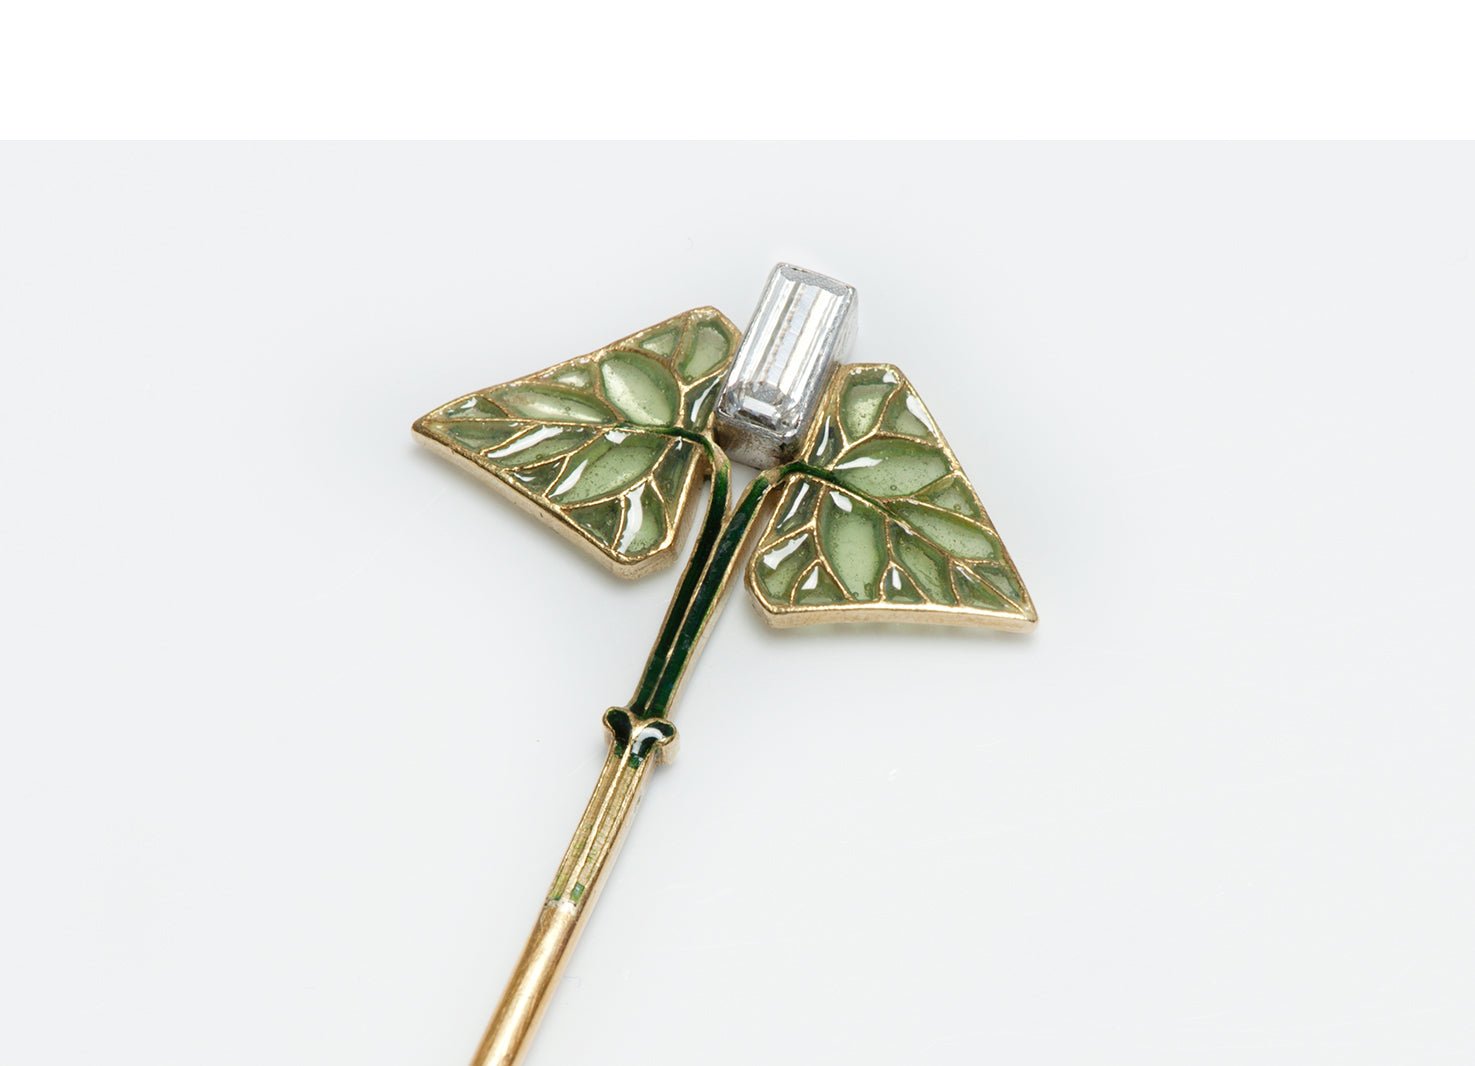 René Lalique - The Shining Star of Art Nouveau Jewelry